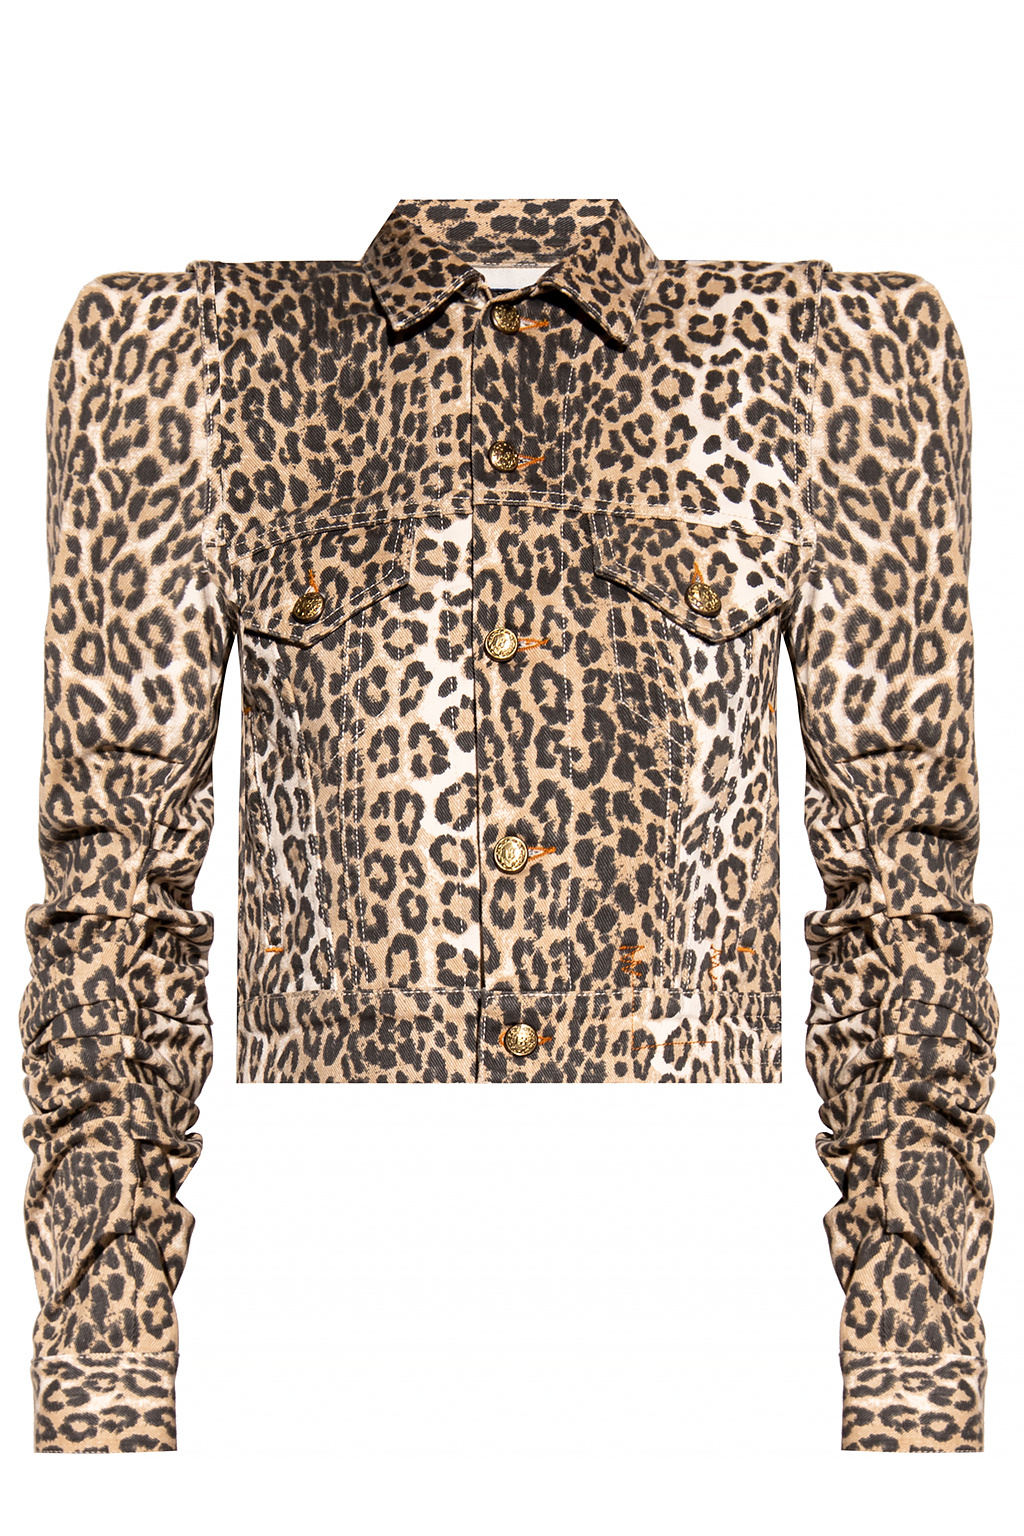 R13 Leopard print jacket